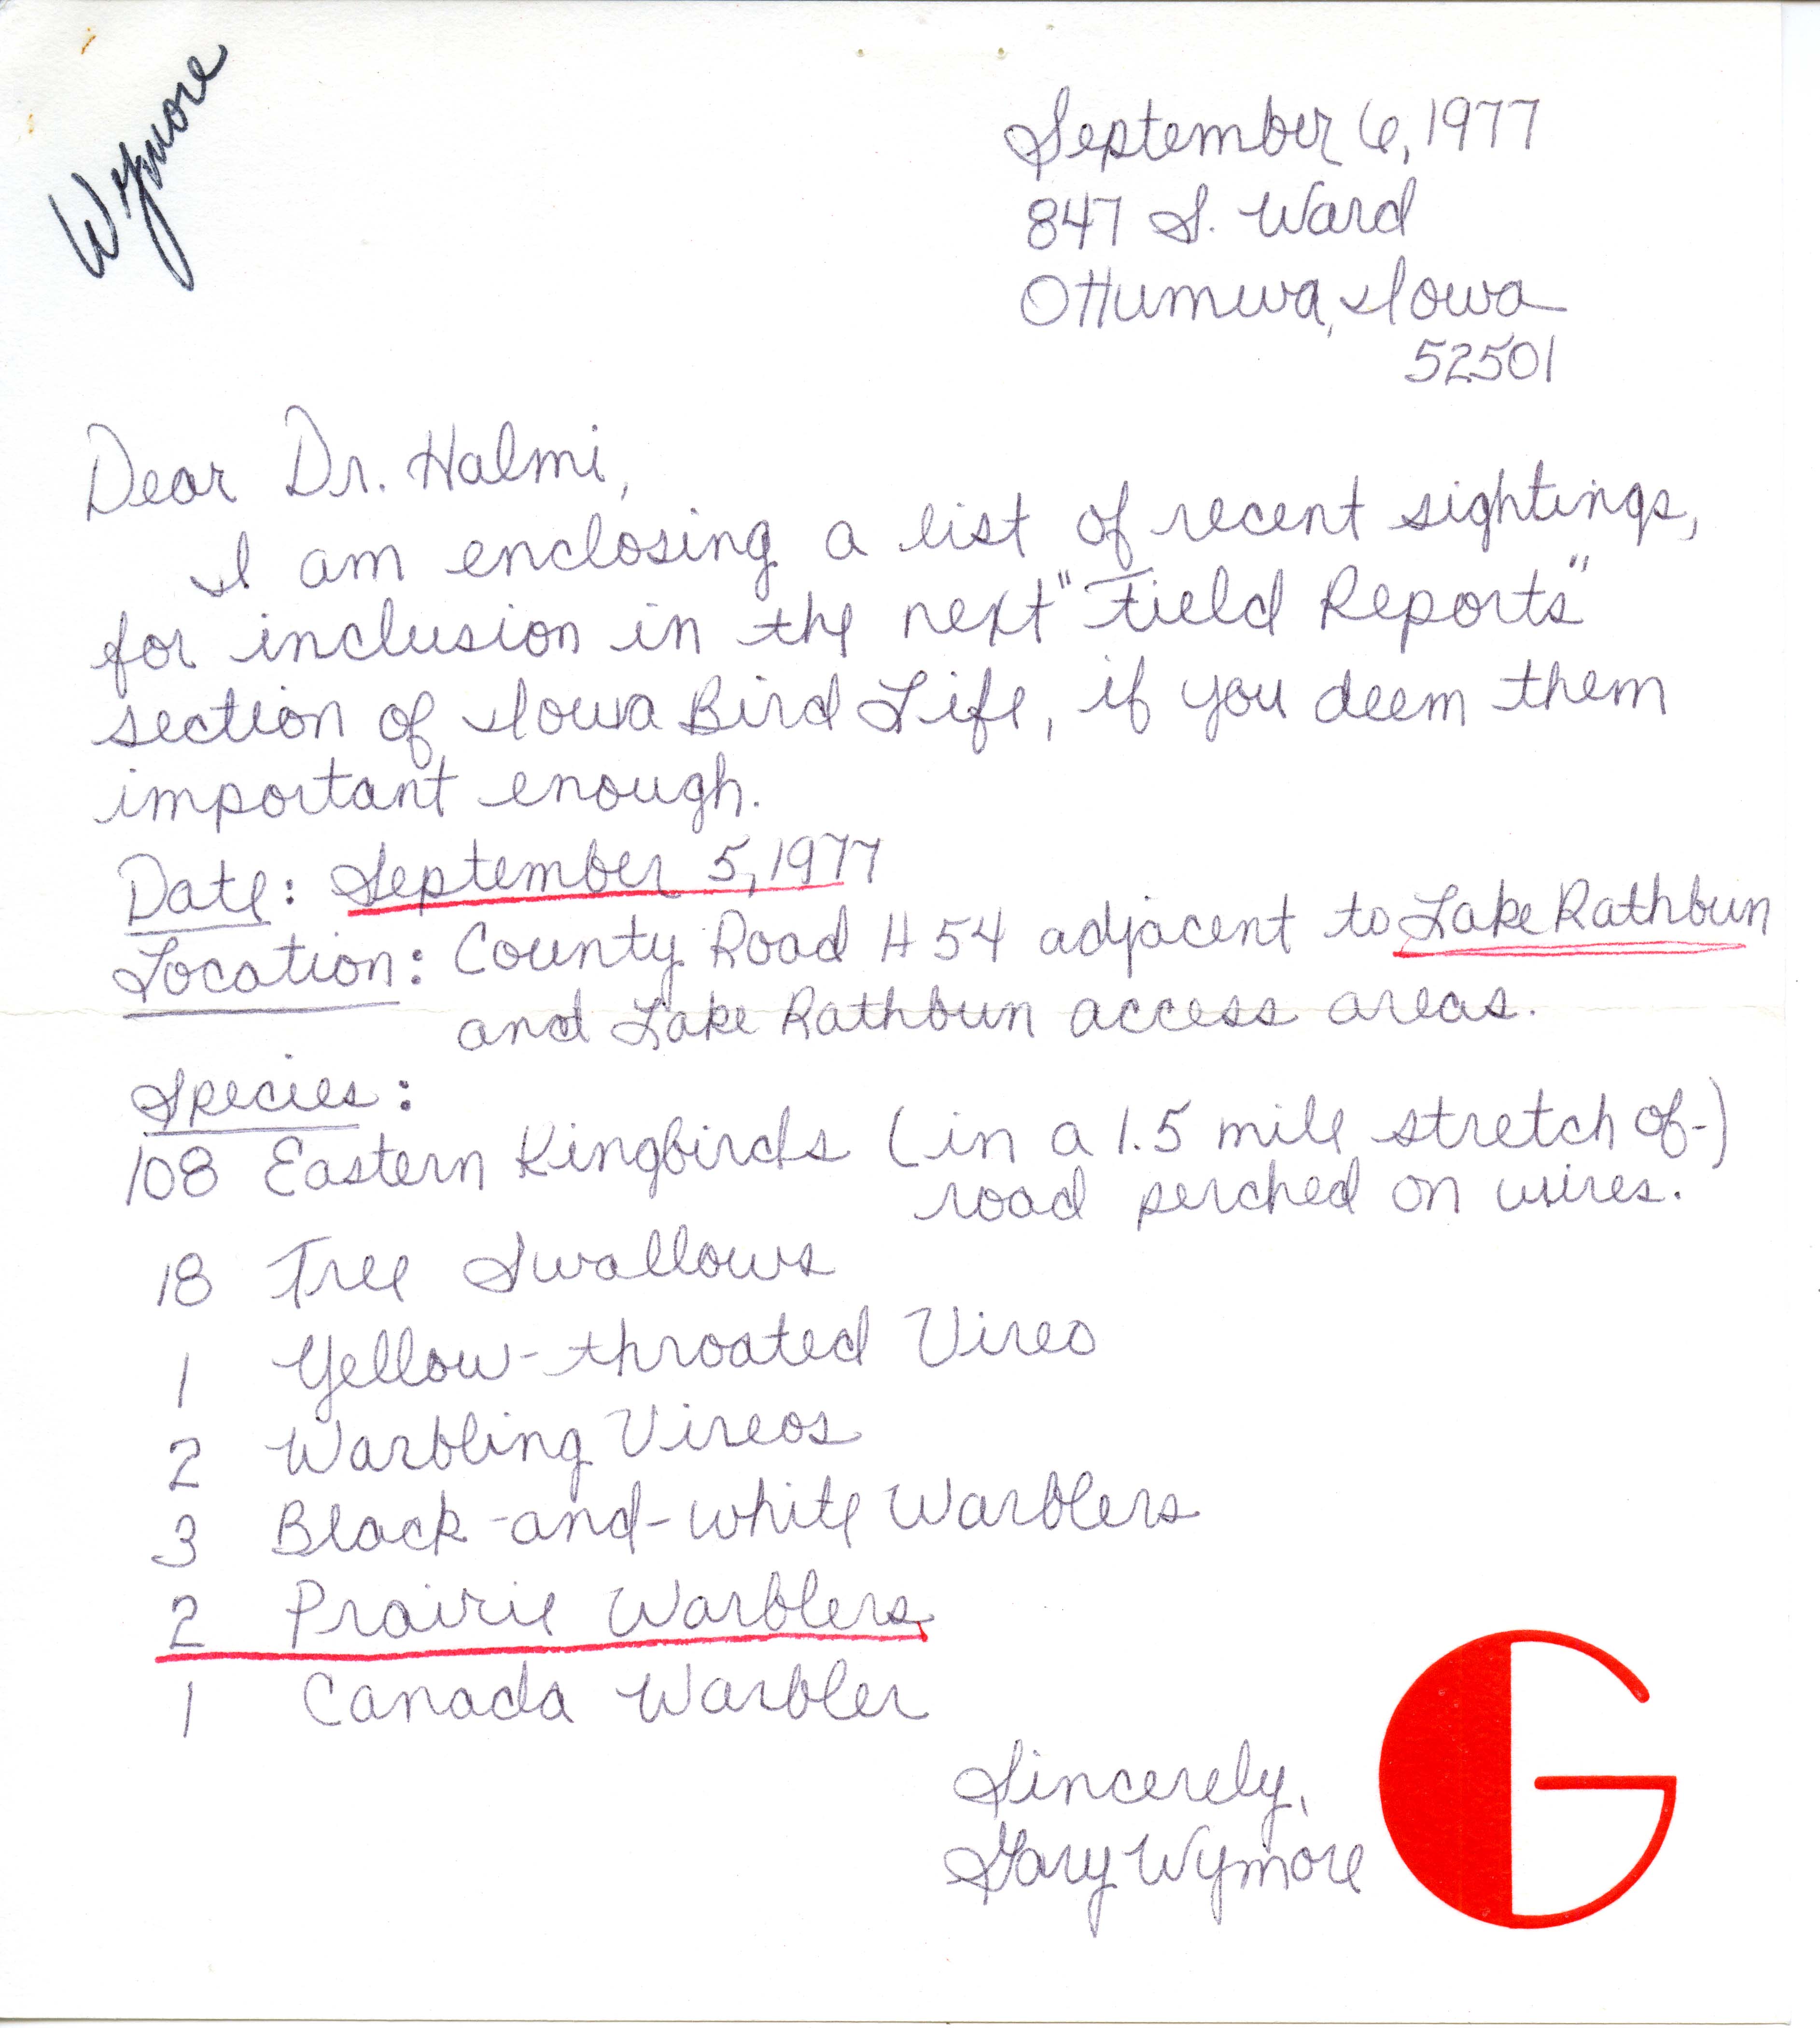 Gary D. Wymore letter to Nicholas S. Halmi regarding bird sightings, September 6, 1977